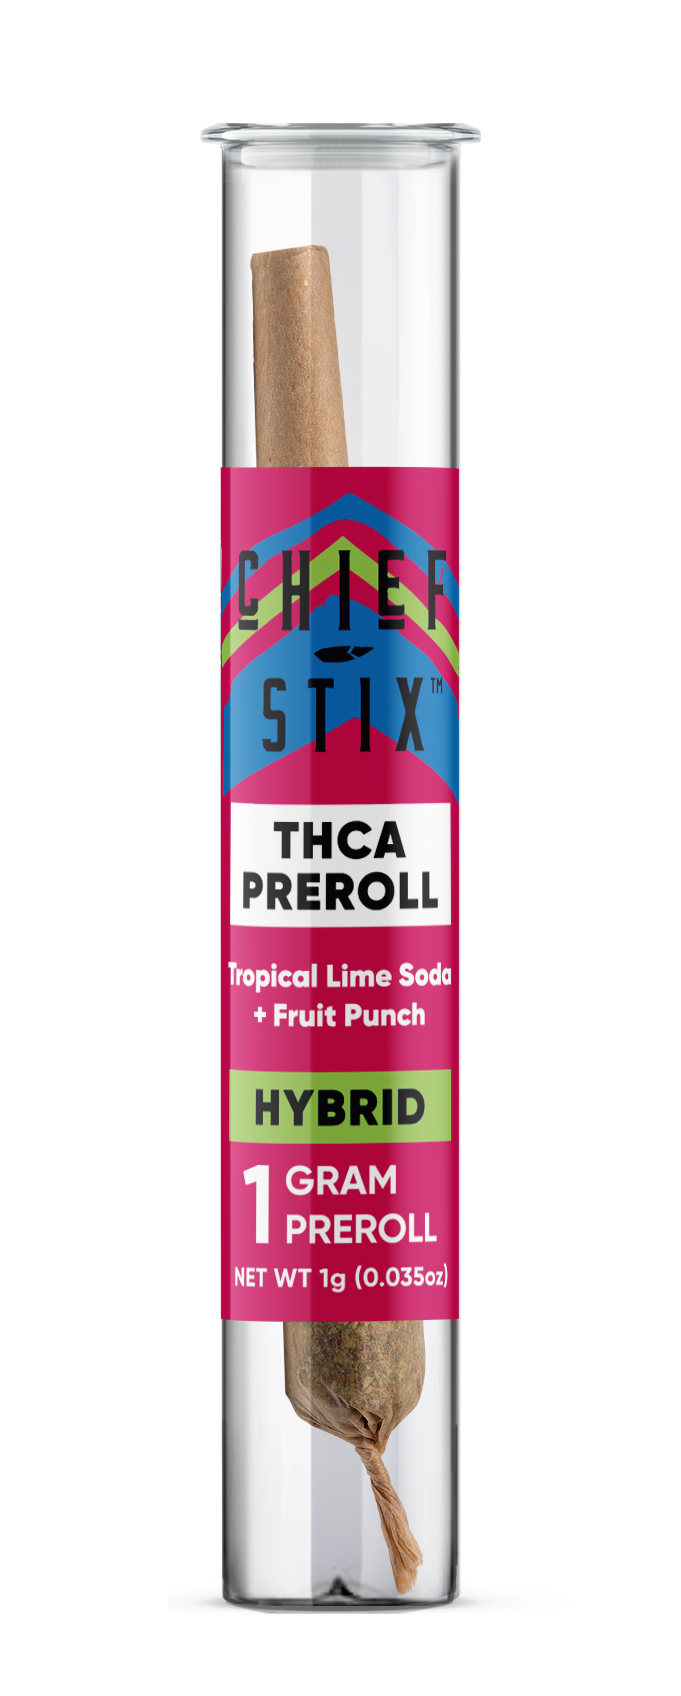 Chief Stix THCA 1 gram Preroll - Hybrid - Tropical Lime Soda + Fruit Punch